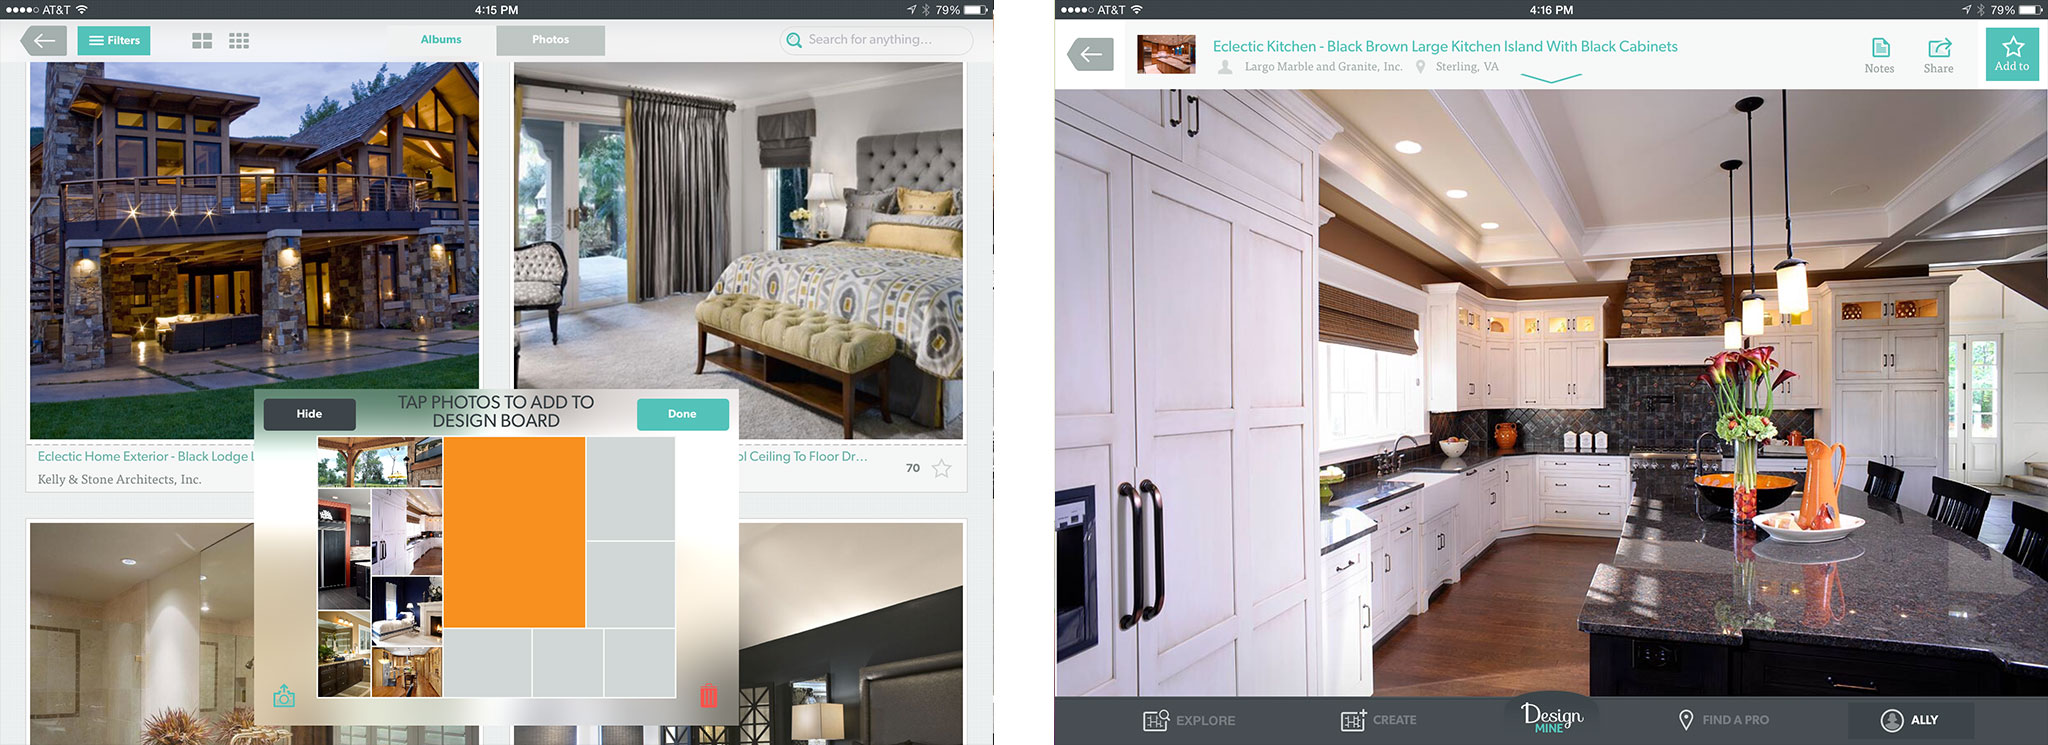 Best home design and improvement apps for iPad: DesignMine